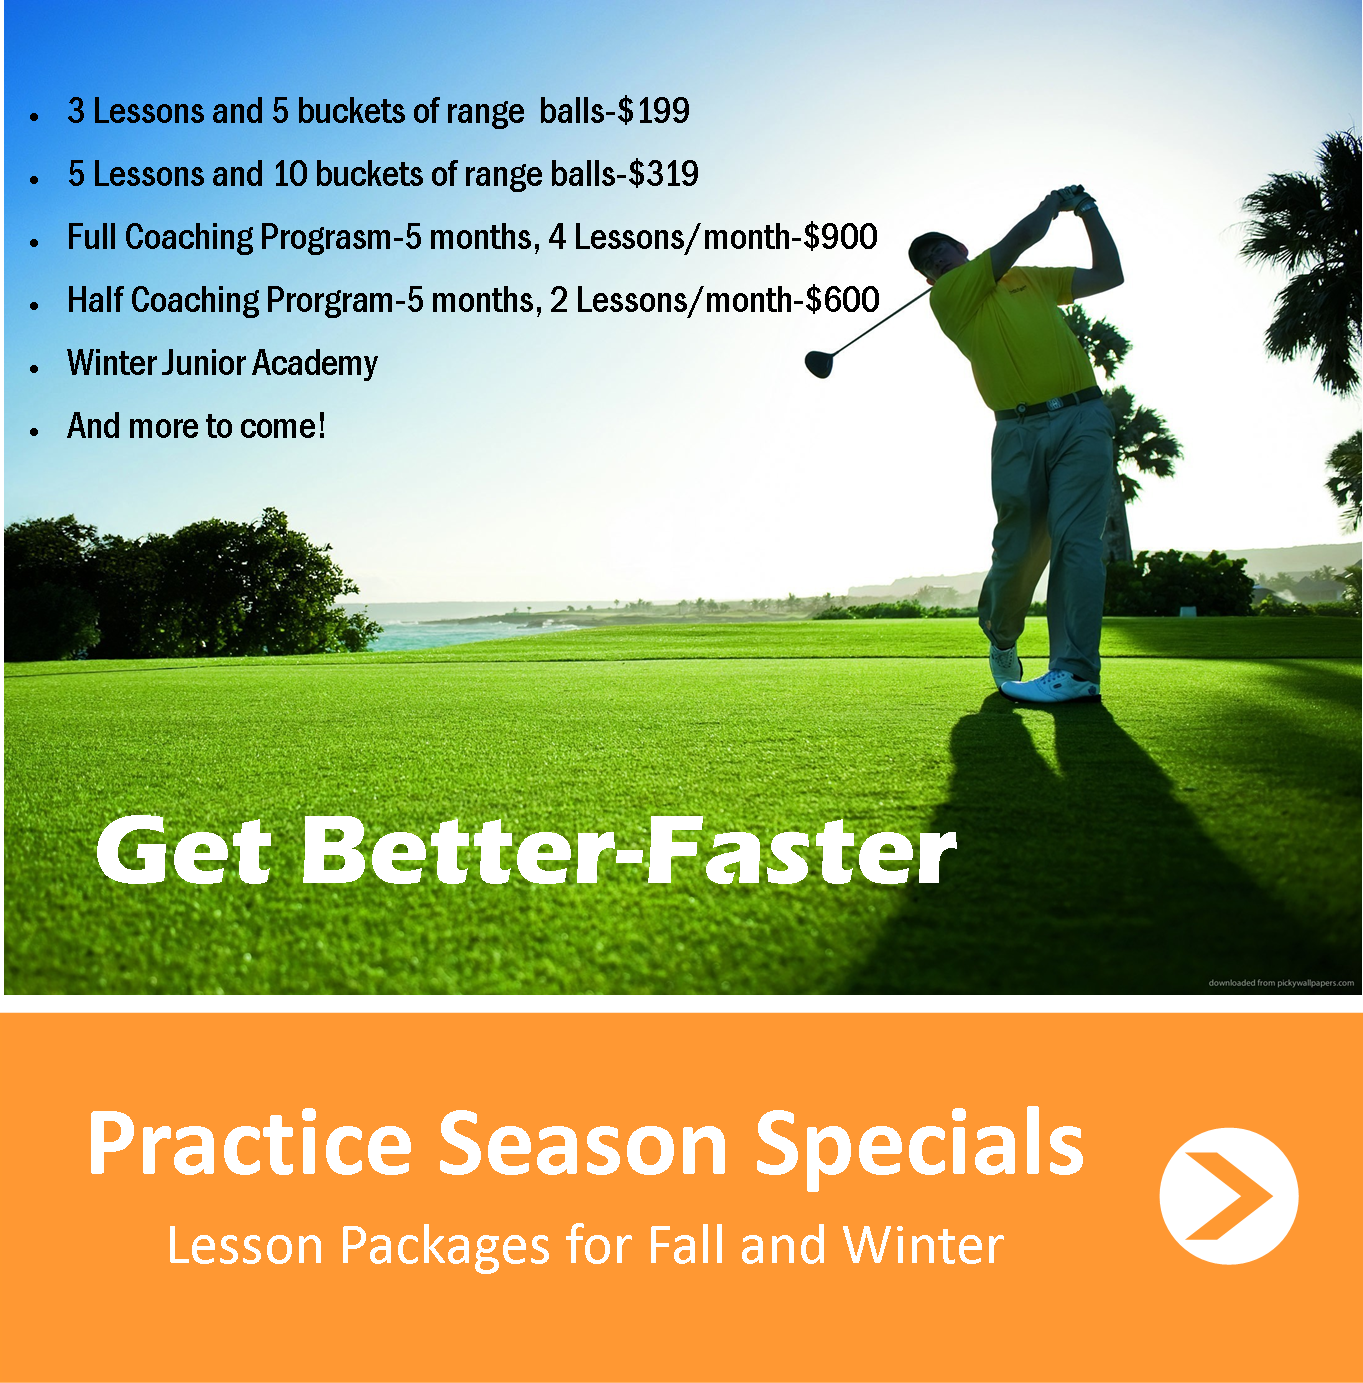 fall-winter-lesson-specials-sah-hah-lee-golf